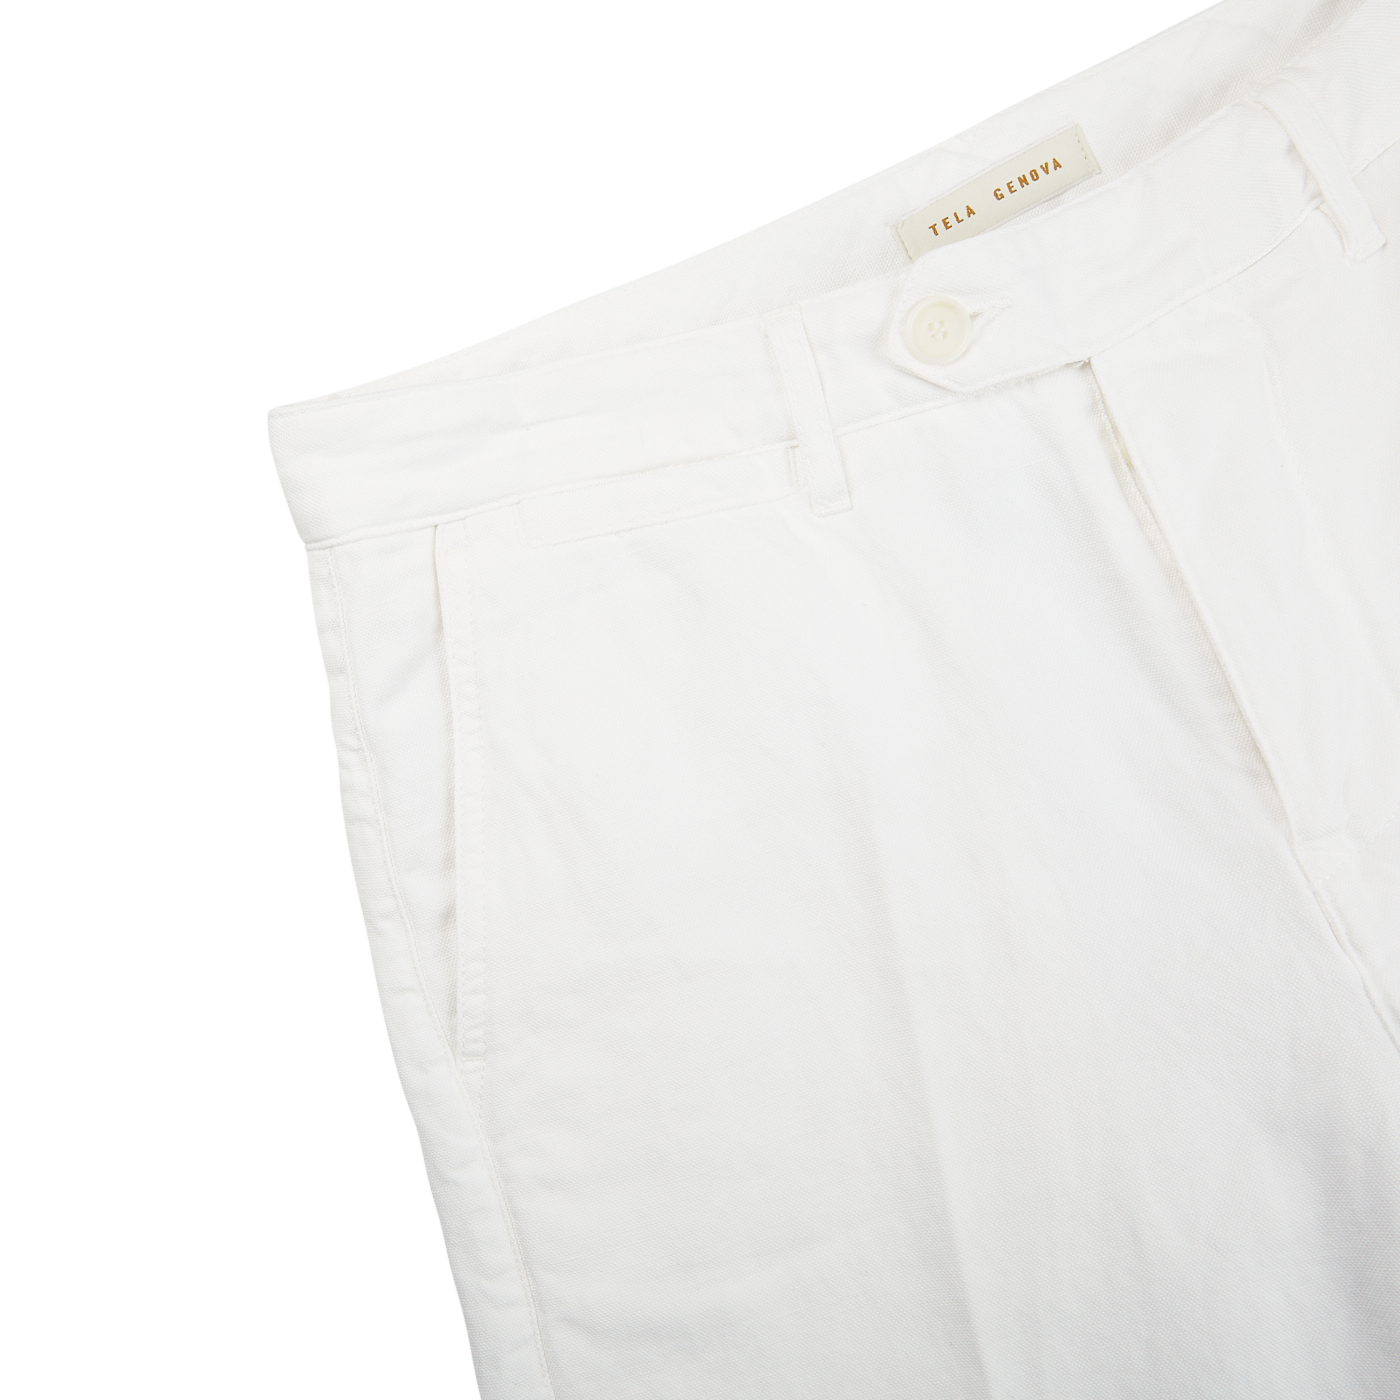 The men's Tela Genova white Cotton Linen Bermuda shorts in a slim fit.